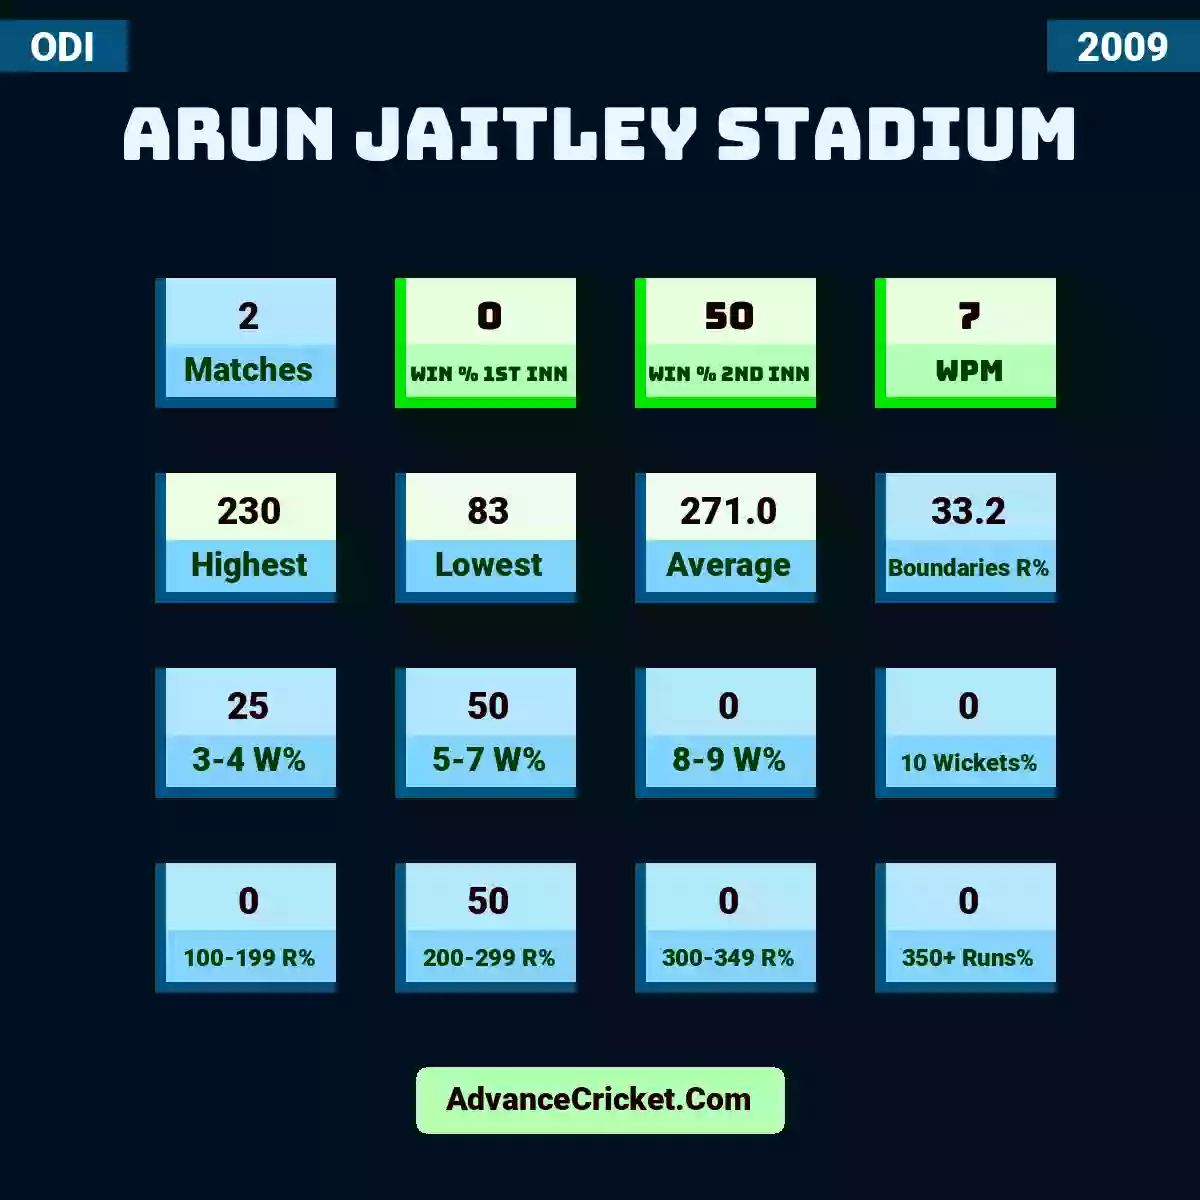 Image showing Arun Jaitley Stadium with Matches: 2, Win % 1st Inn: 0, Win % 2nd Inn: 50, WPM: 7, Highest: 230, Lowest: 83, Average: 271.0, Boundaries R%: 33.2, 3-4 W%: 25, 5-7 W%: 50, 8-9 W%: 0, 10 Wickets%: 0, 100-199 R%: 0, 200-299 R%: 50, 300-349 R%: 0, 350+ Runs%: 0.